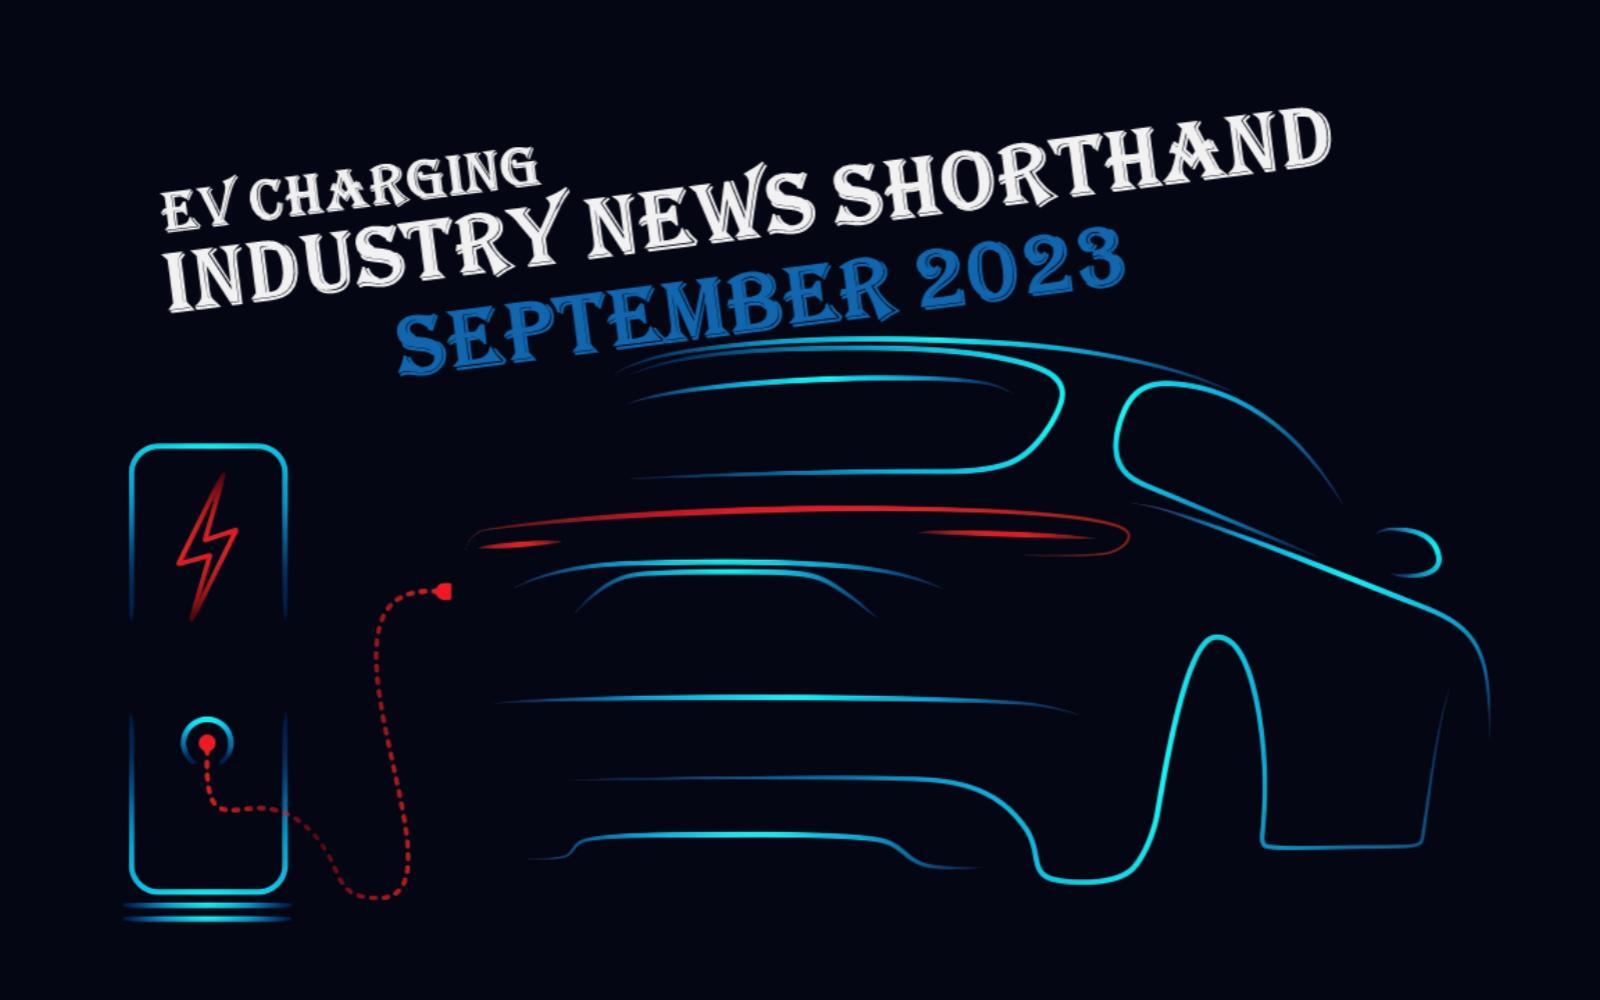 September 2023 EV charging industry news summary